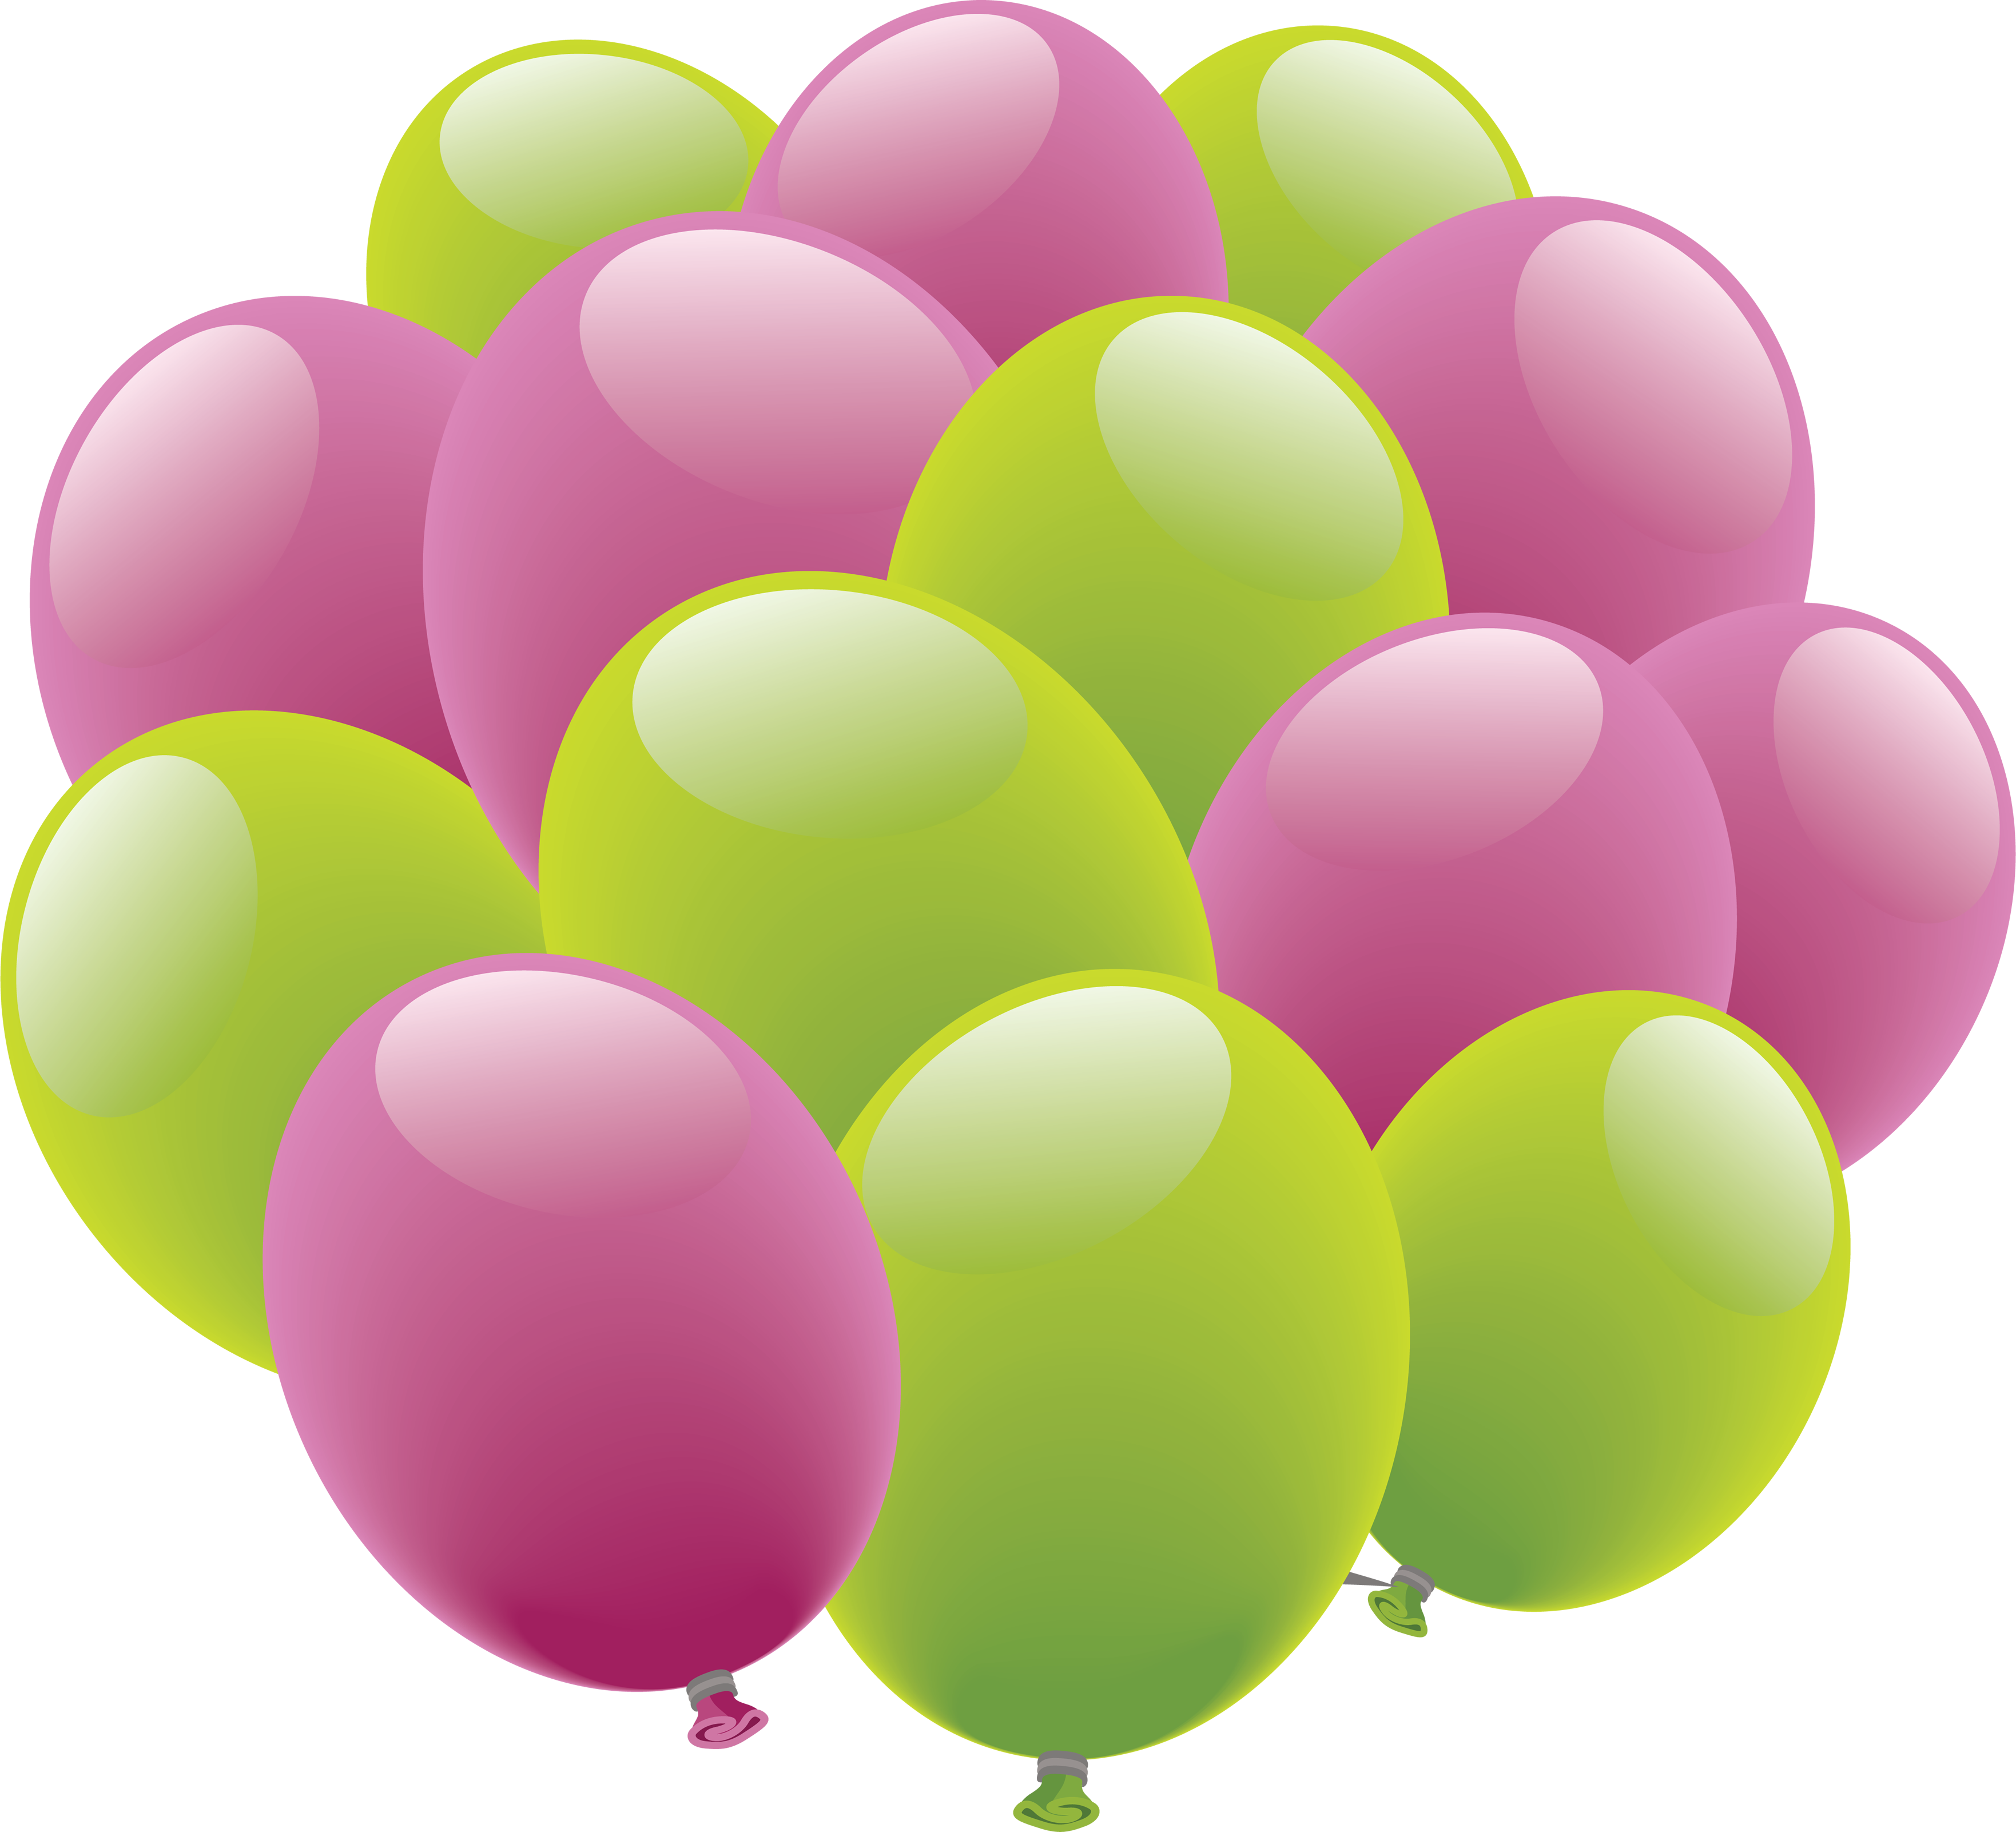 Balloon Drawing Images - Alpha Kappa Alpha Birthday (3525x3203)